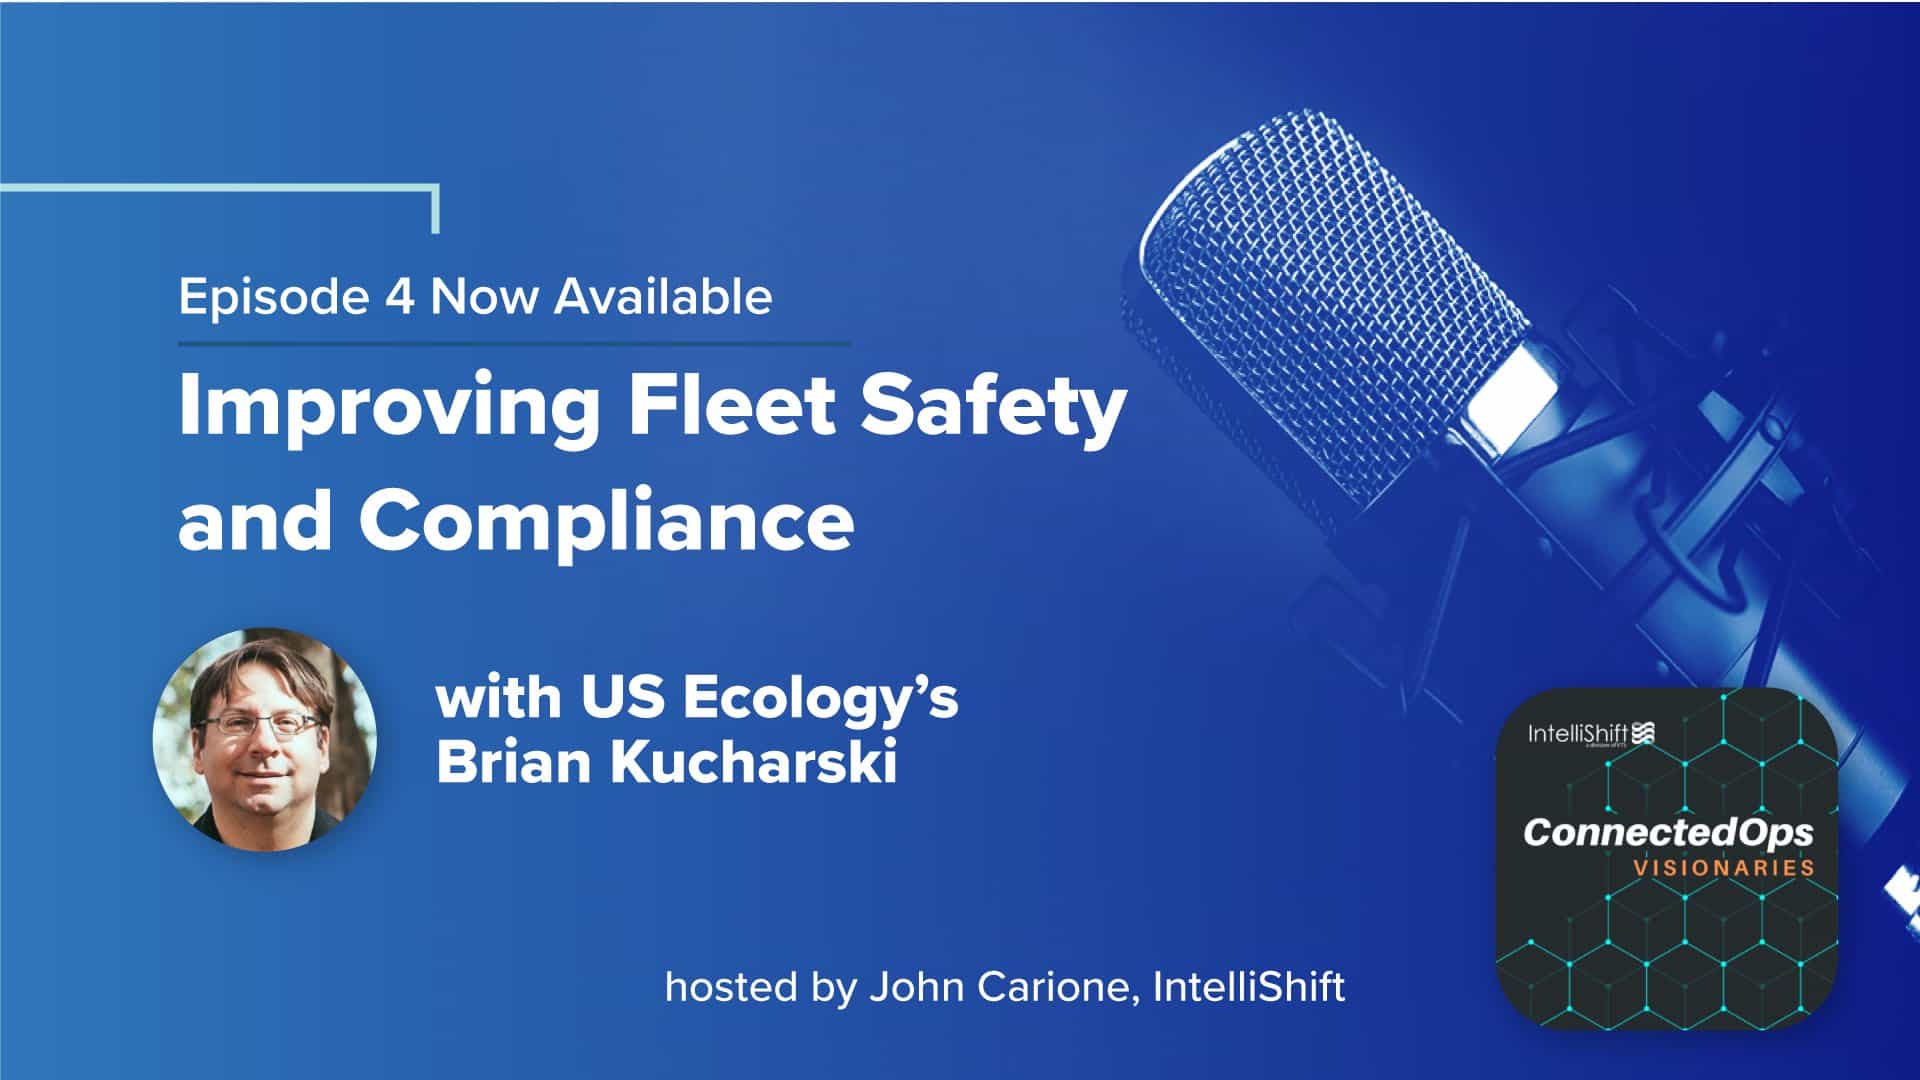 US Ecology's Brian Kucharski on Improving Fleet Safety and Compliance